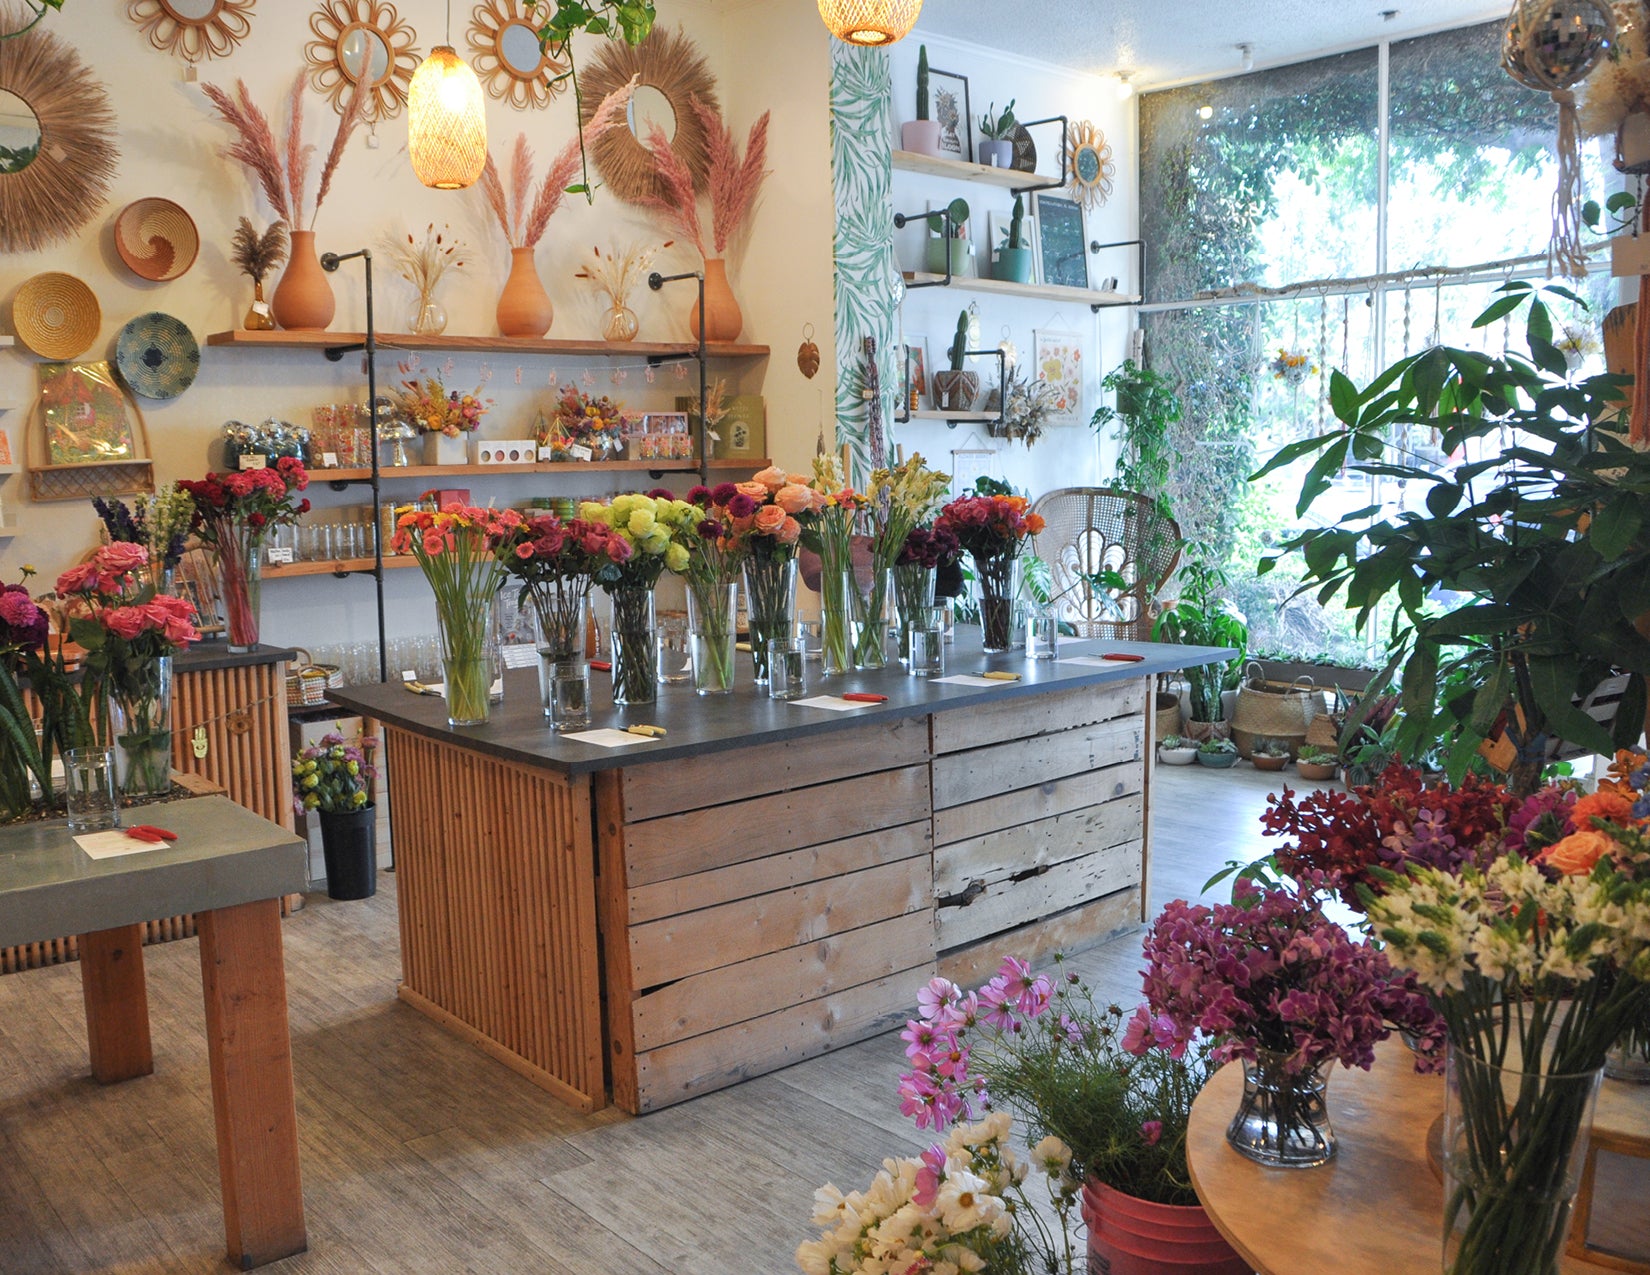 wildflora blog workshop flower arranging succulent planter florist shop teaching how to education studio city store vases cut stems roses